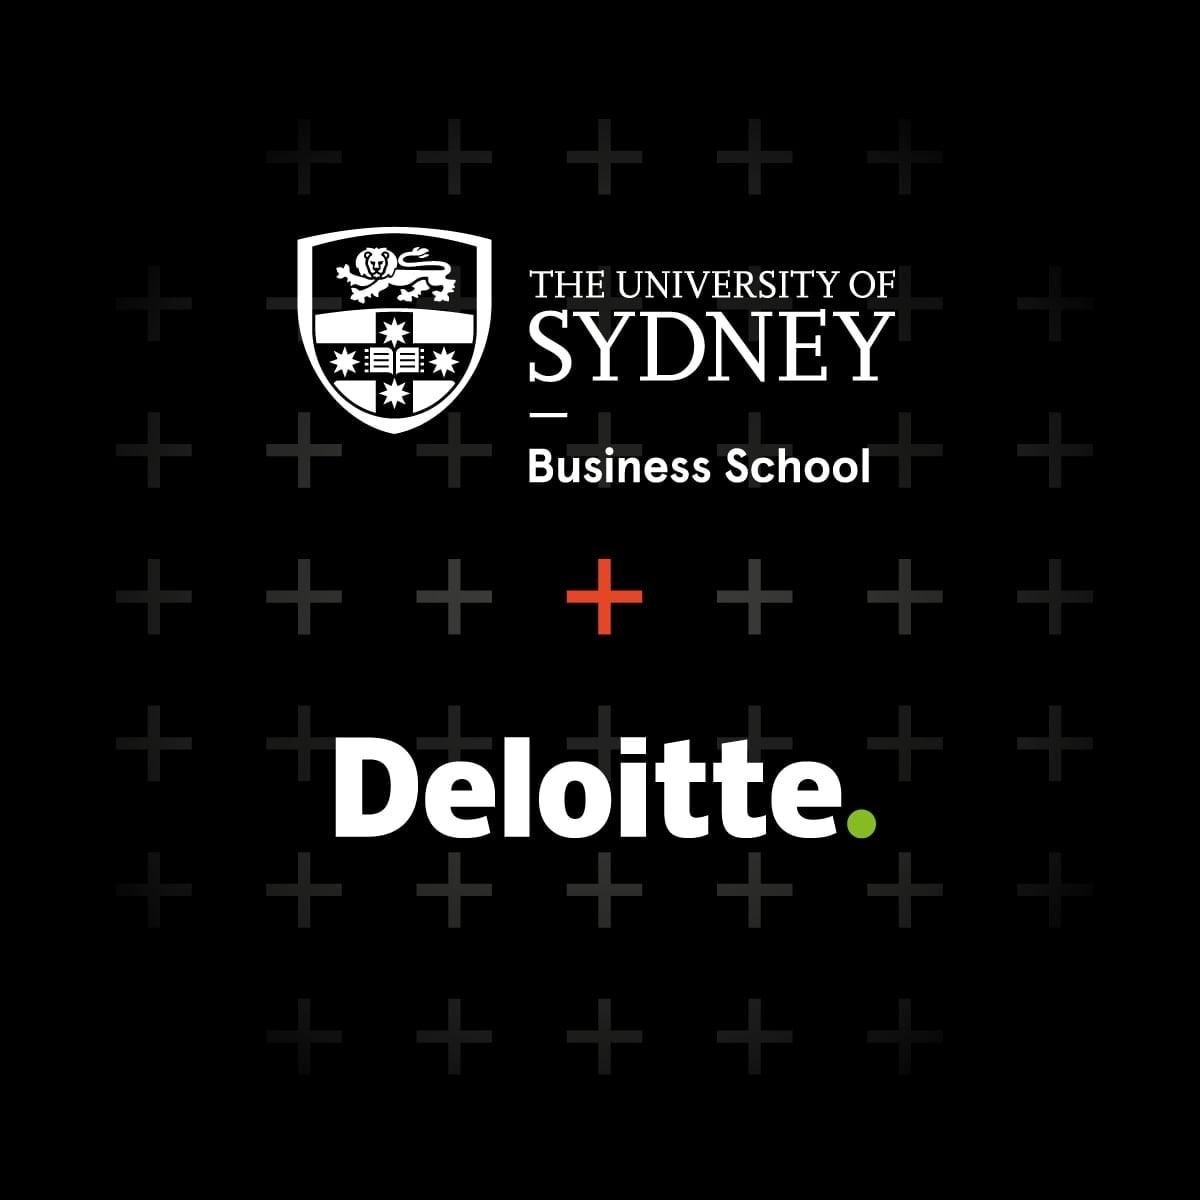 university of sydney business school and deloitte logos